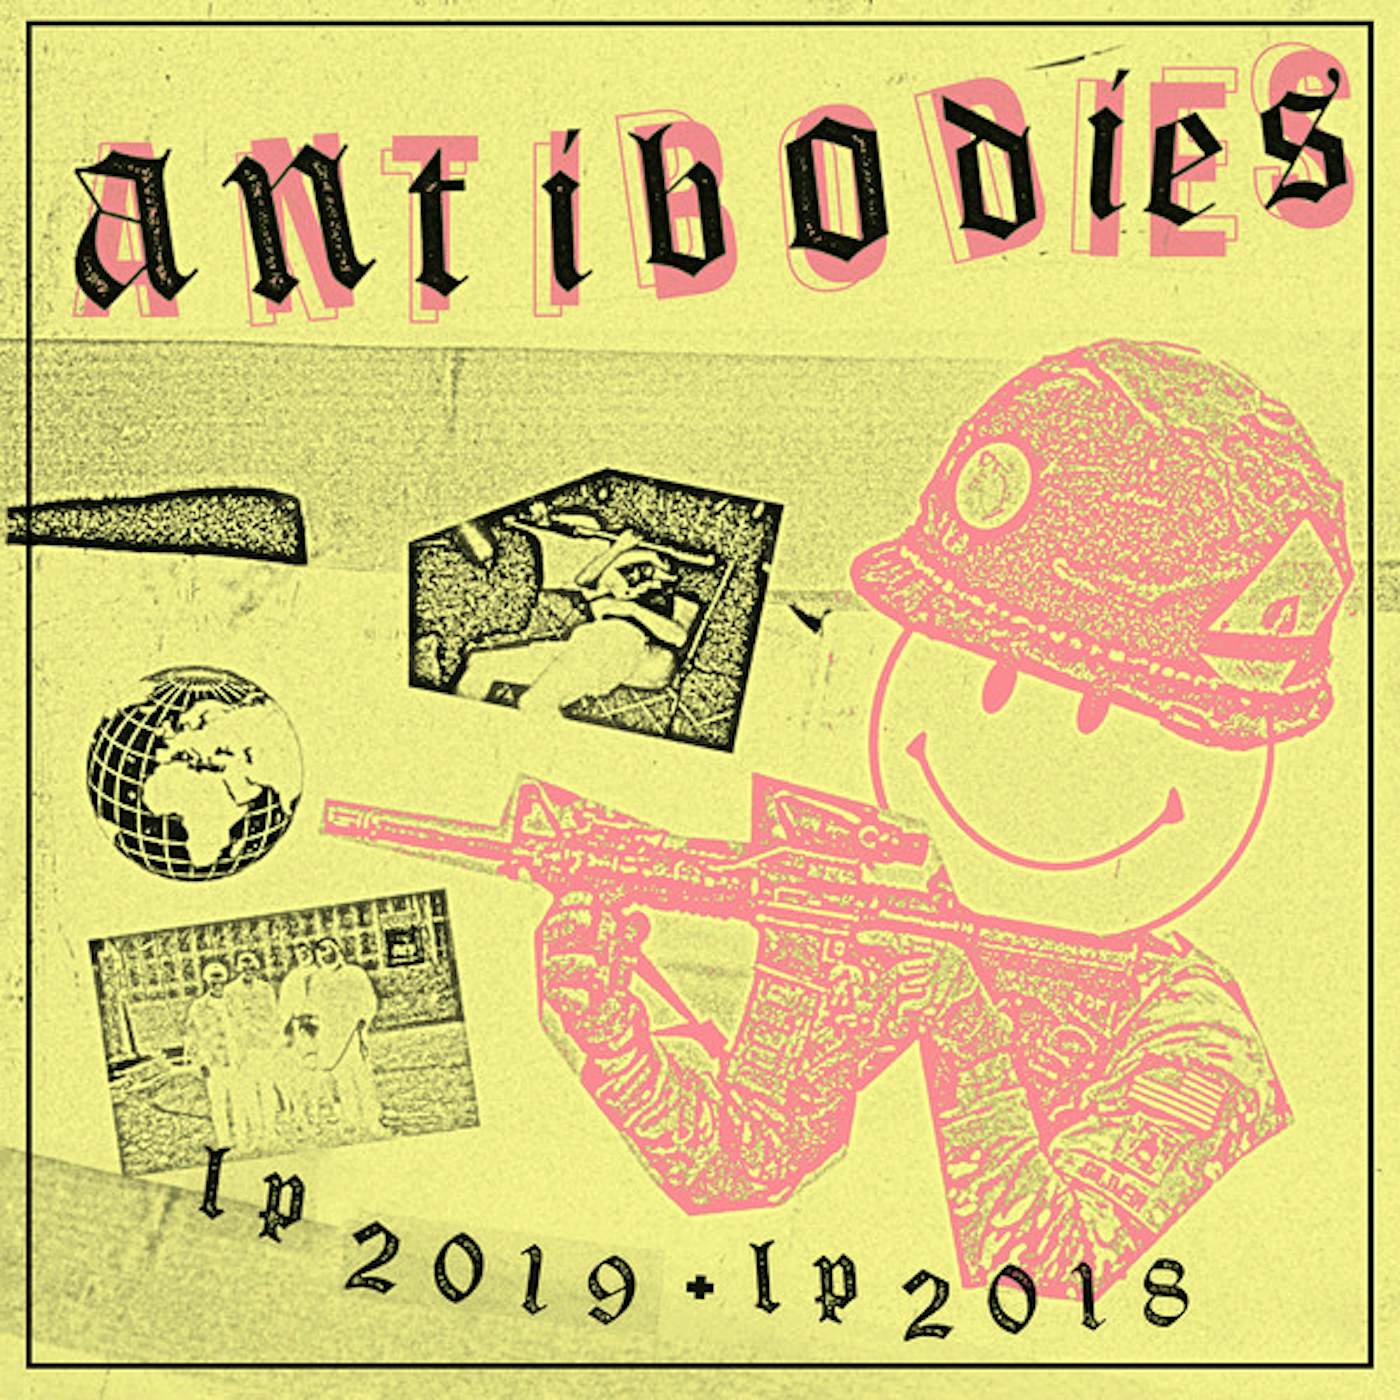 Antibodies Lp 2019 + Lp 2018 Vinyl Record